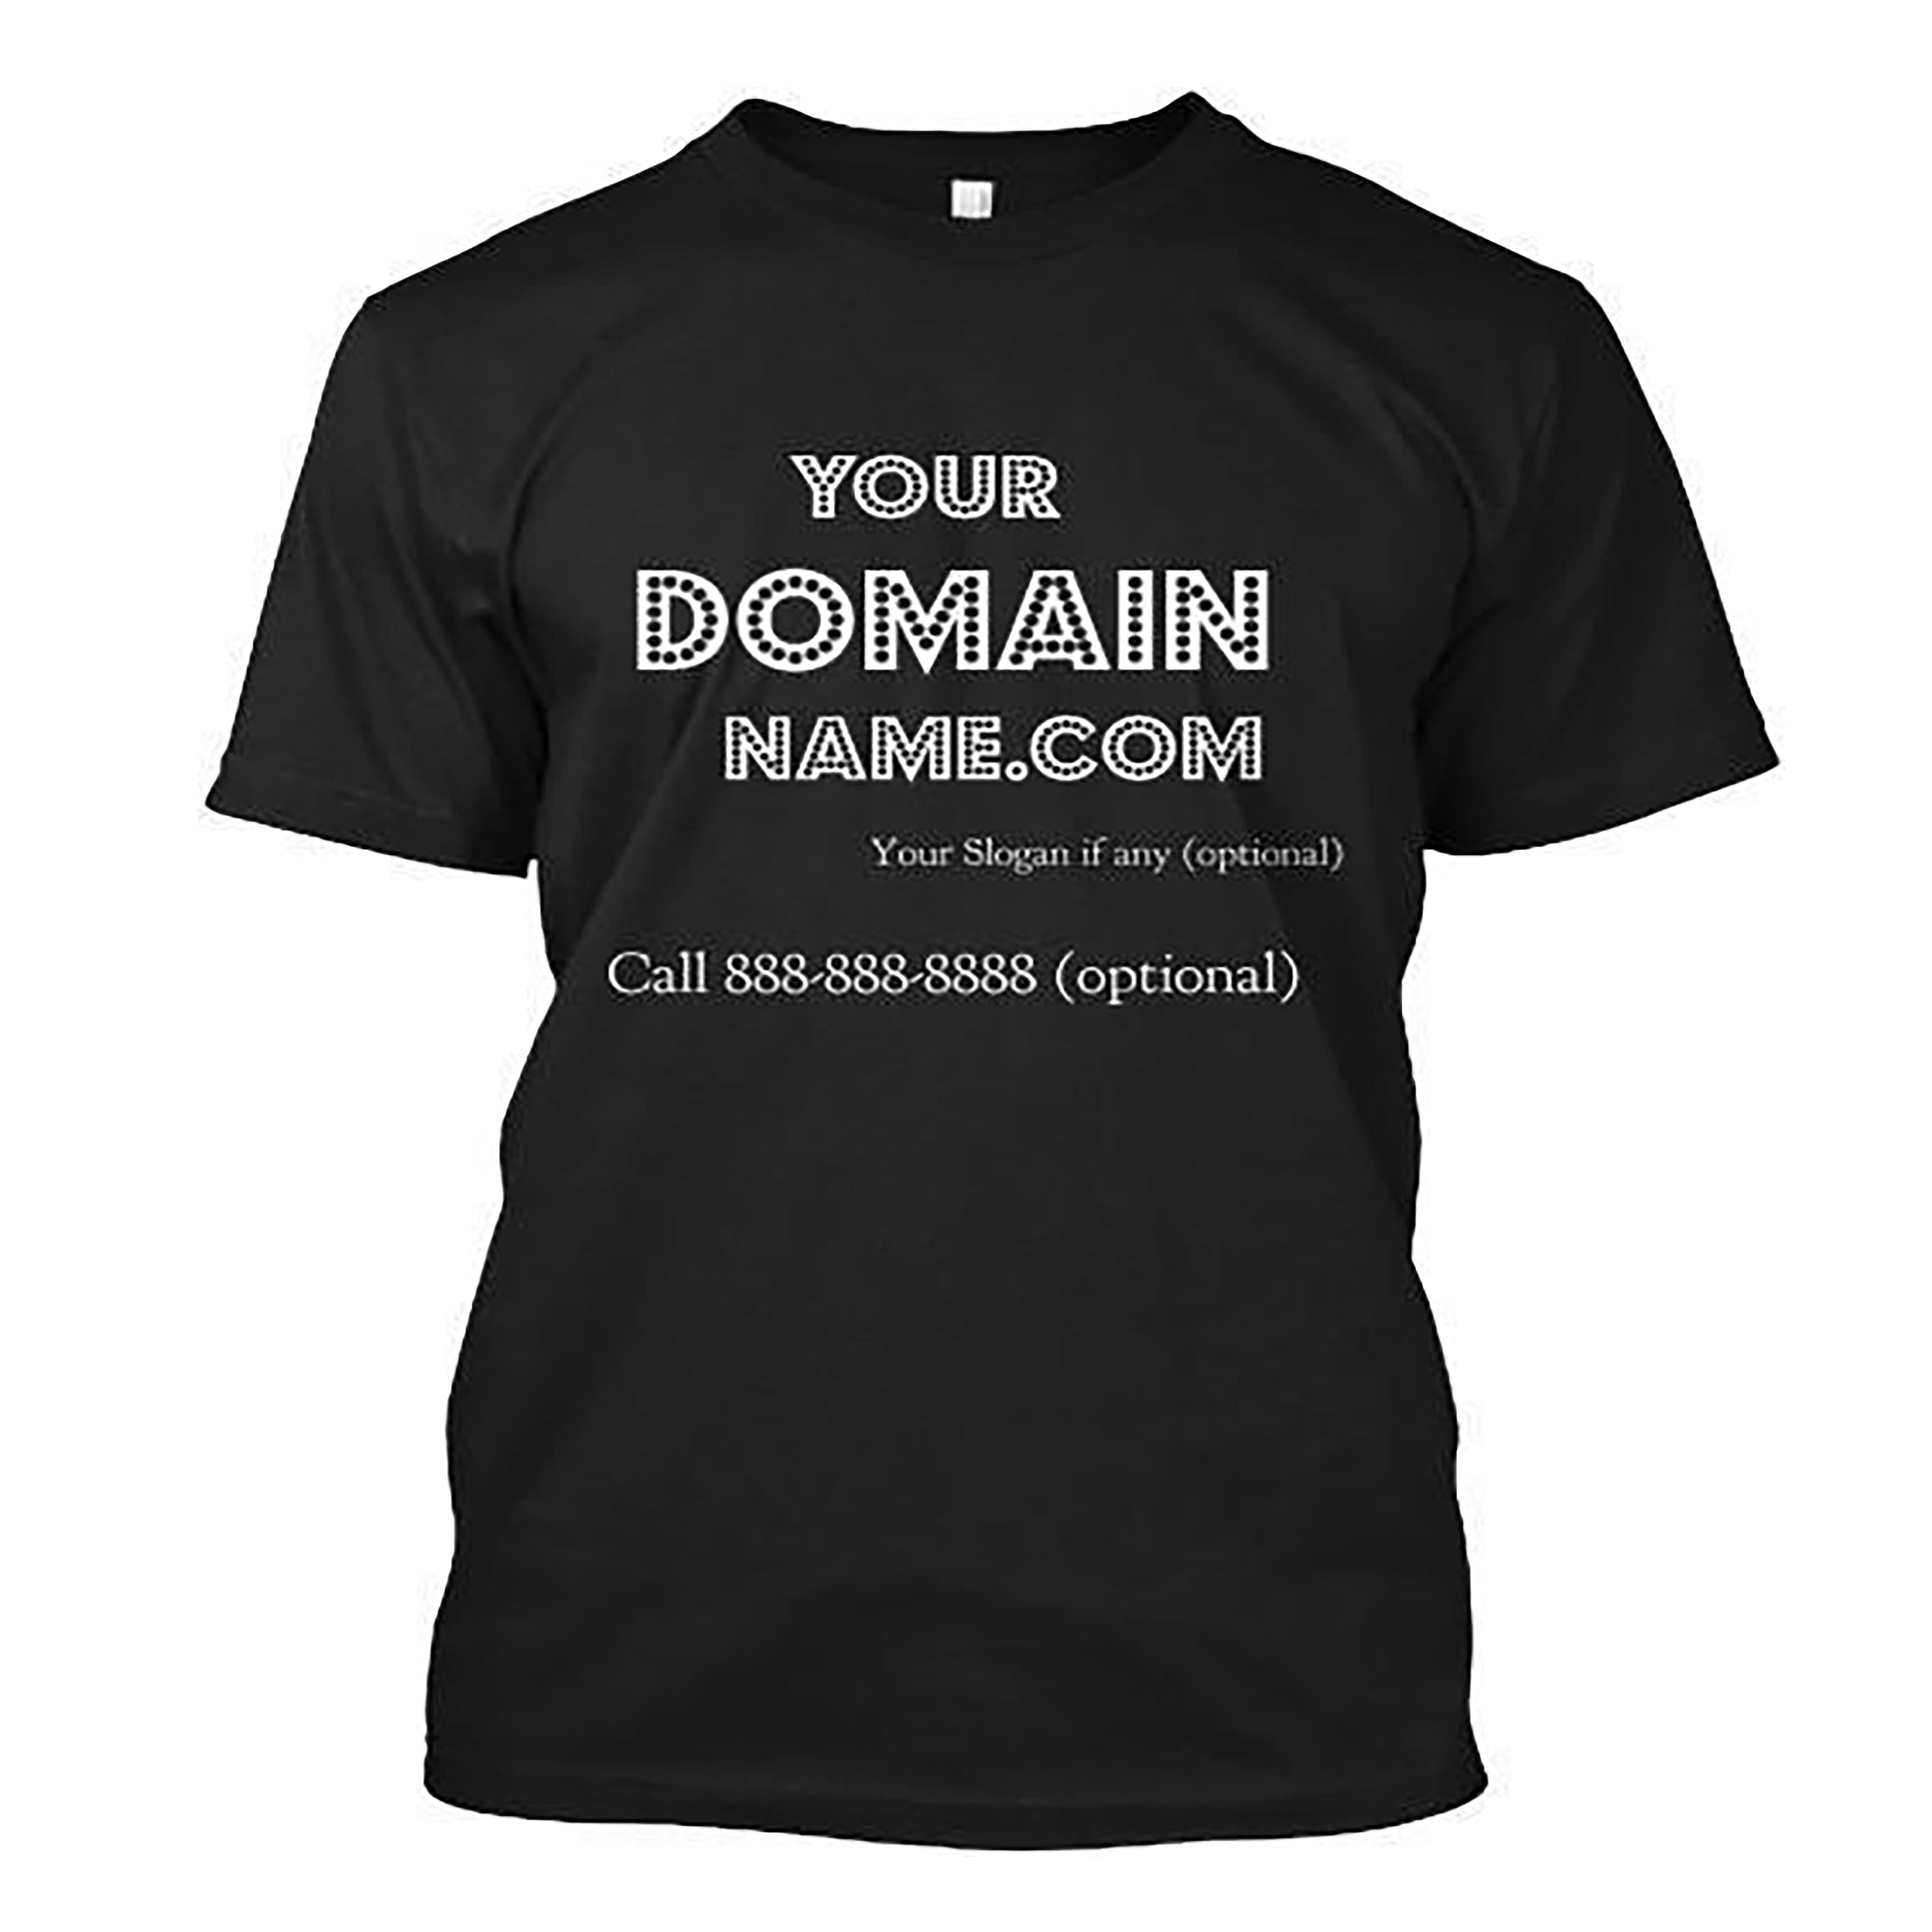 "Domain/Company Name"